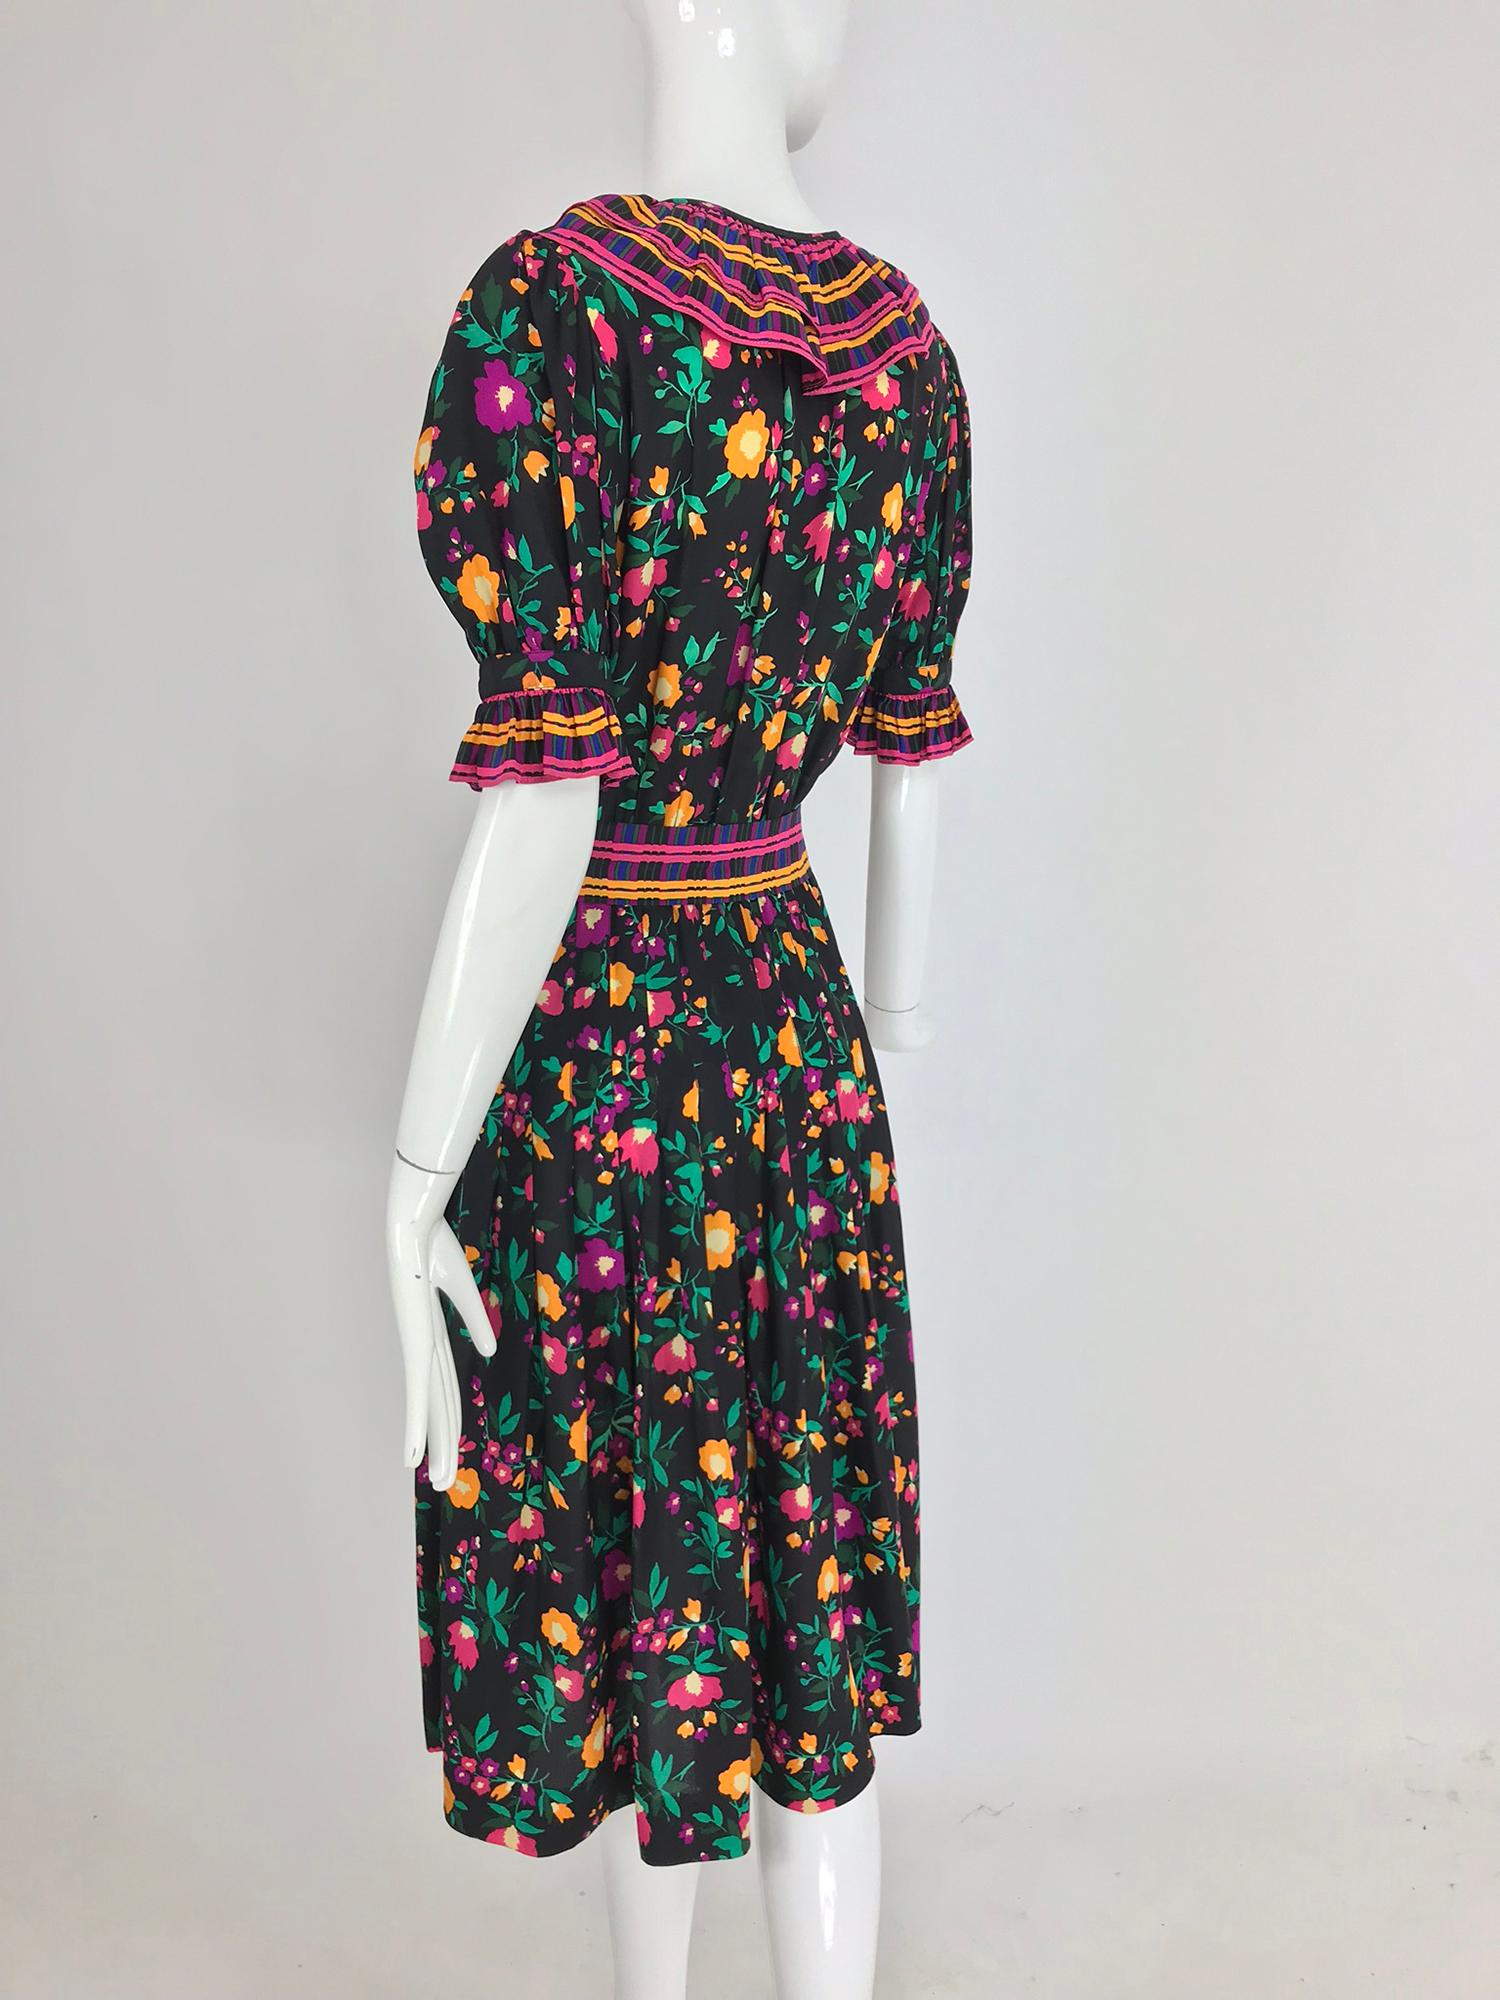 Yves Saint Laurent Rive Gauche floral silk mix print dress 1970s 1